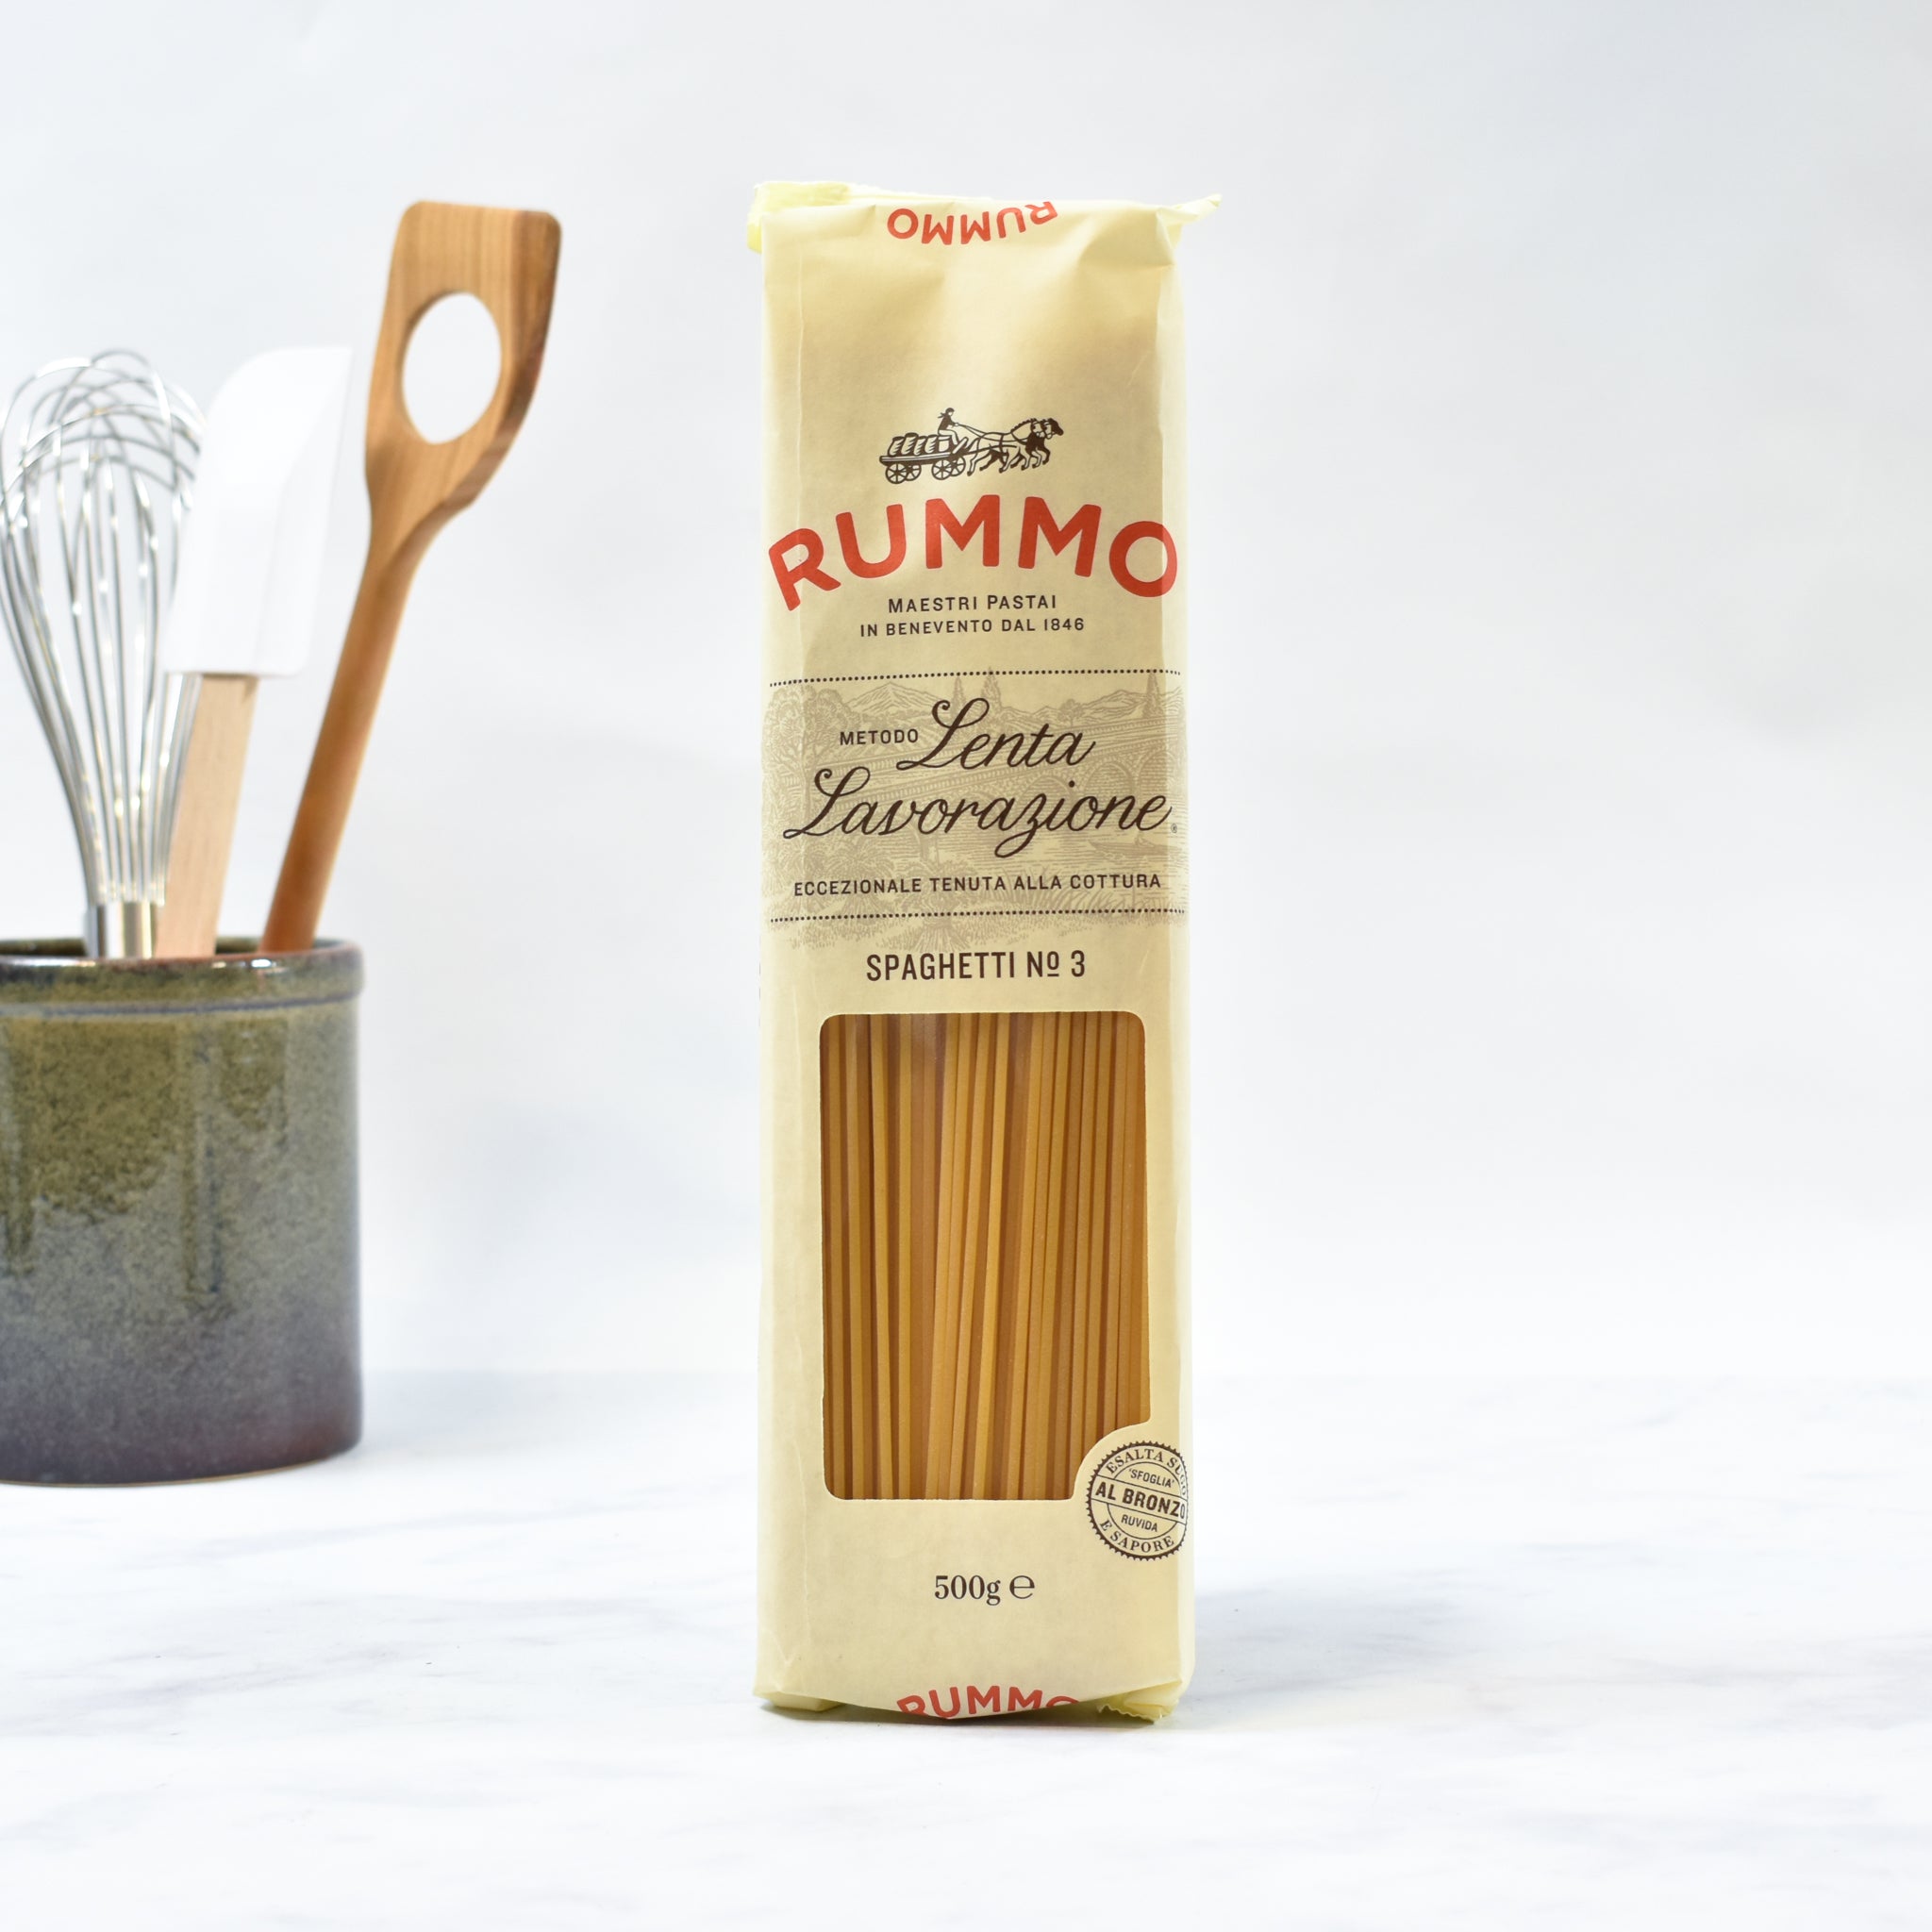 Rummo Spaghetti 500g lifestyle photograph